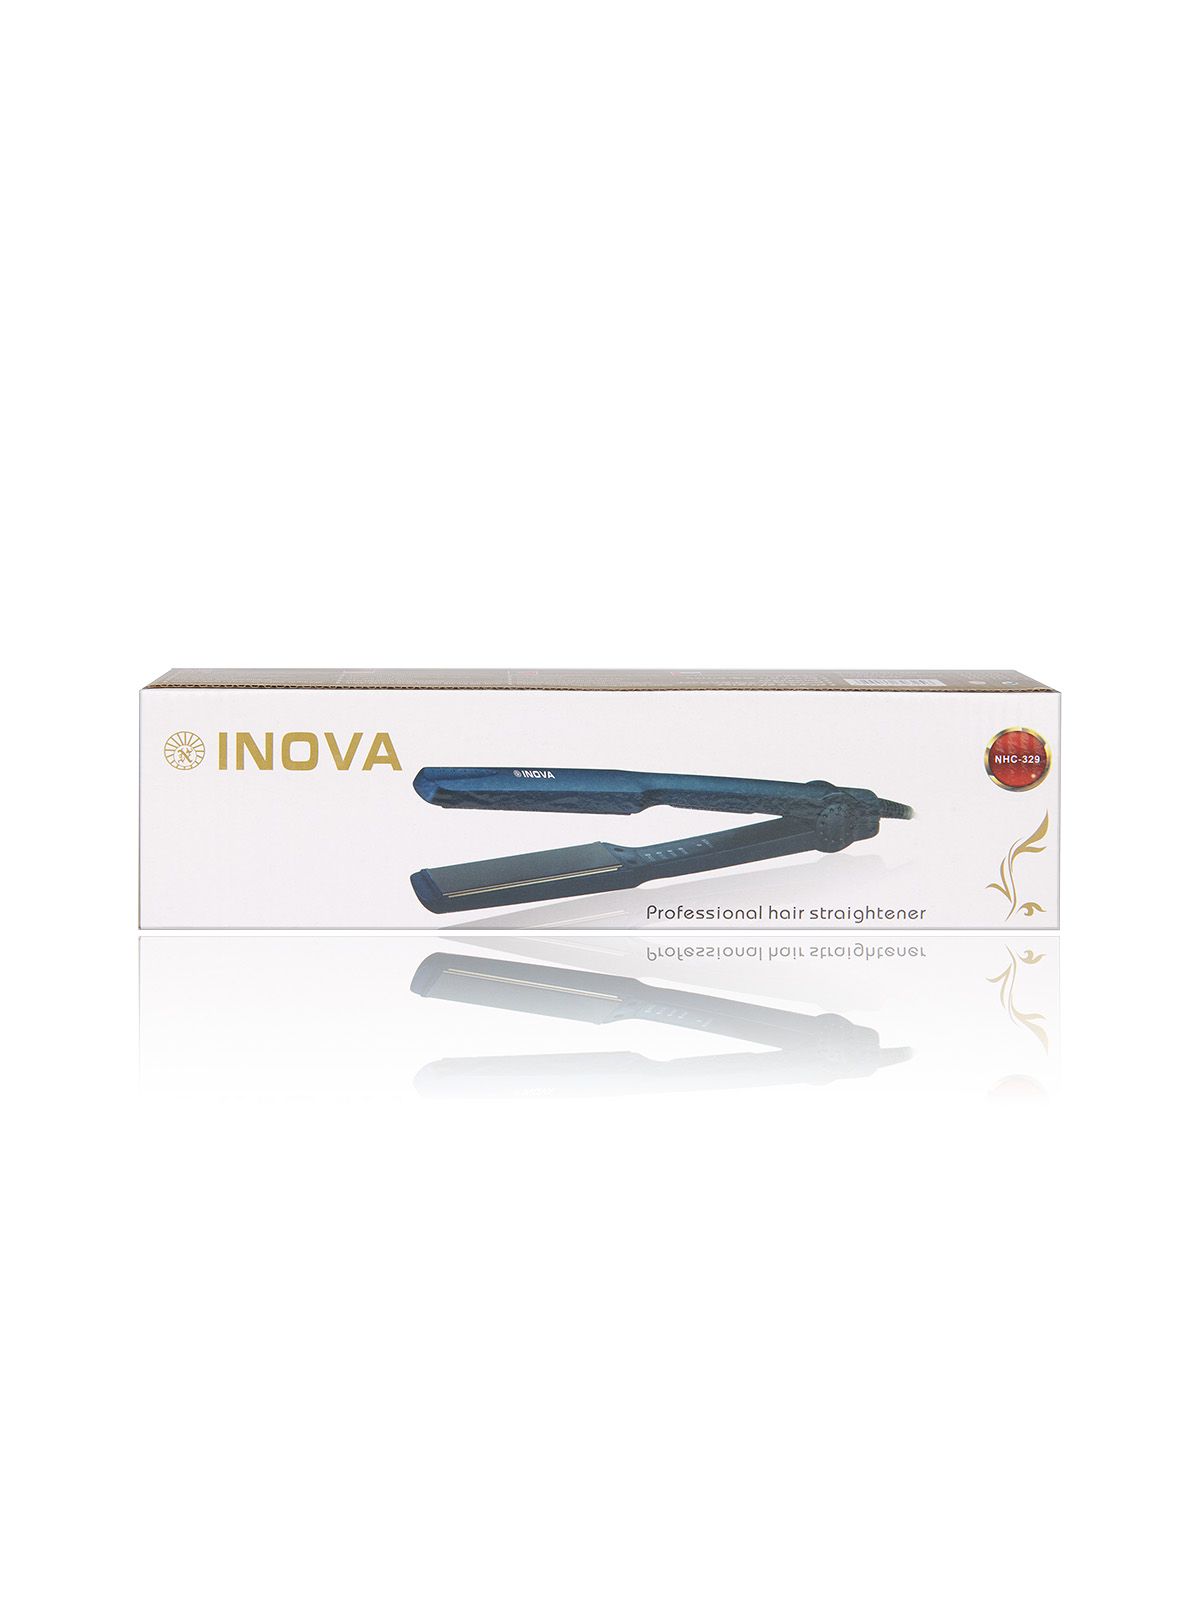 Утюжок для волос с технологией Термобаланса INova оптом - Фото №5